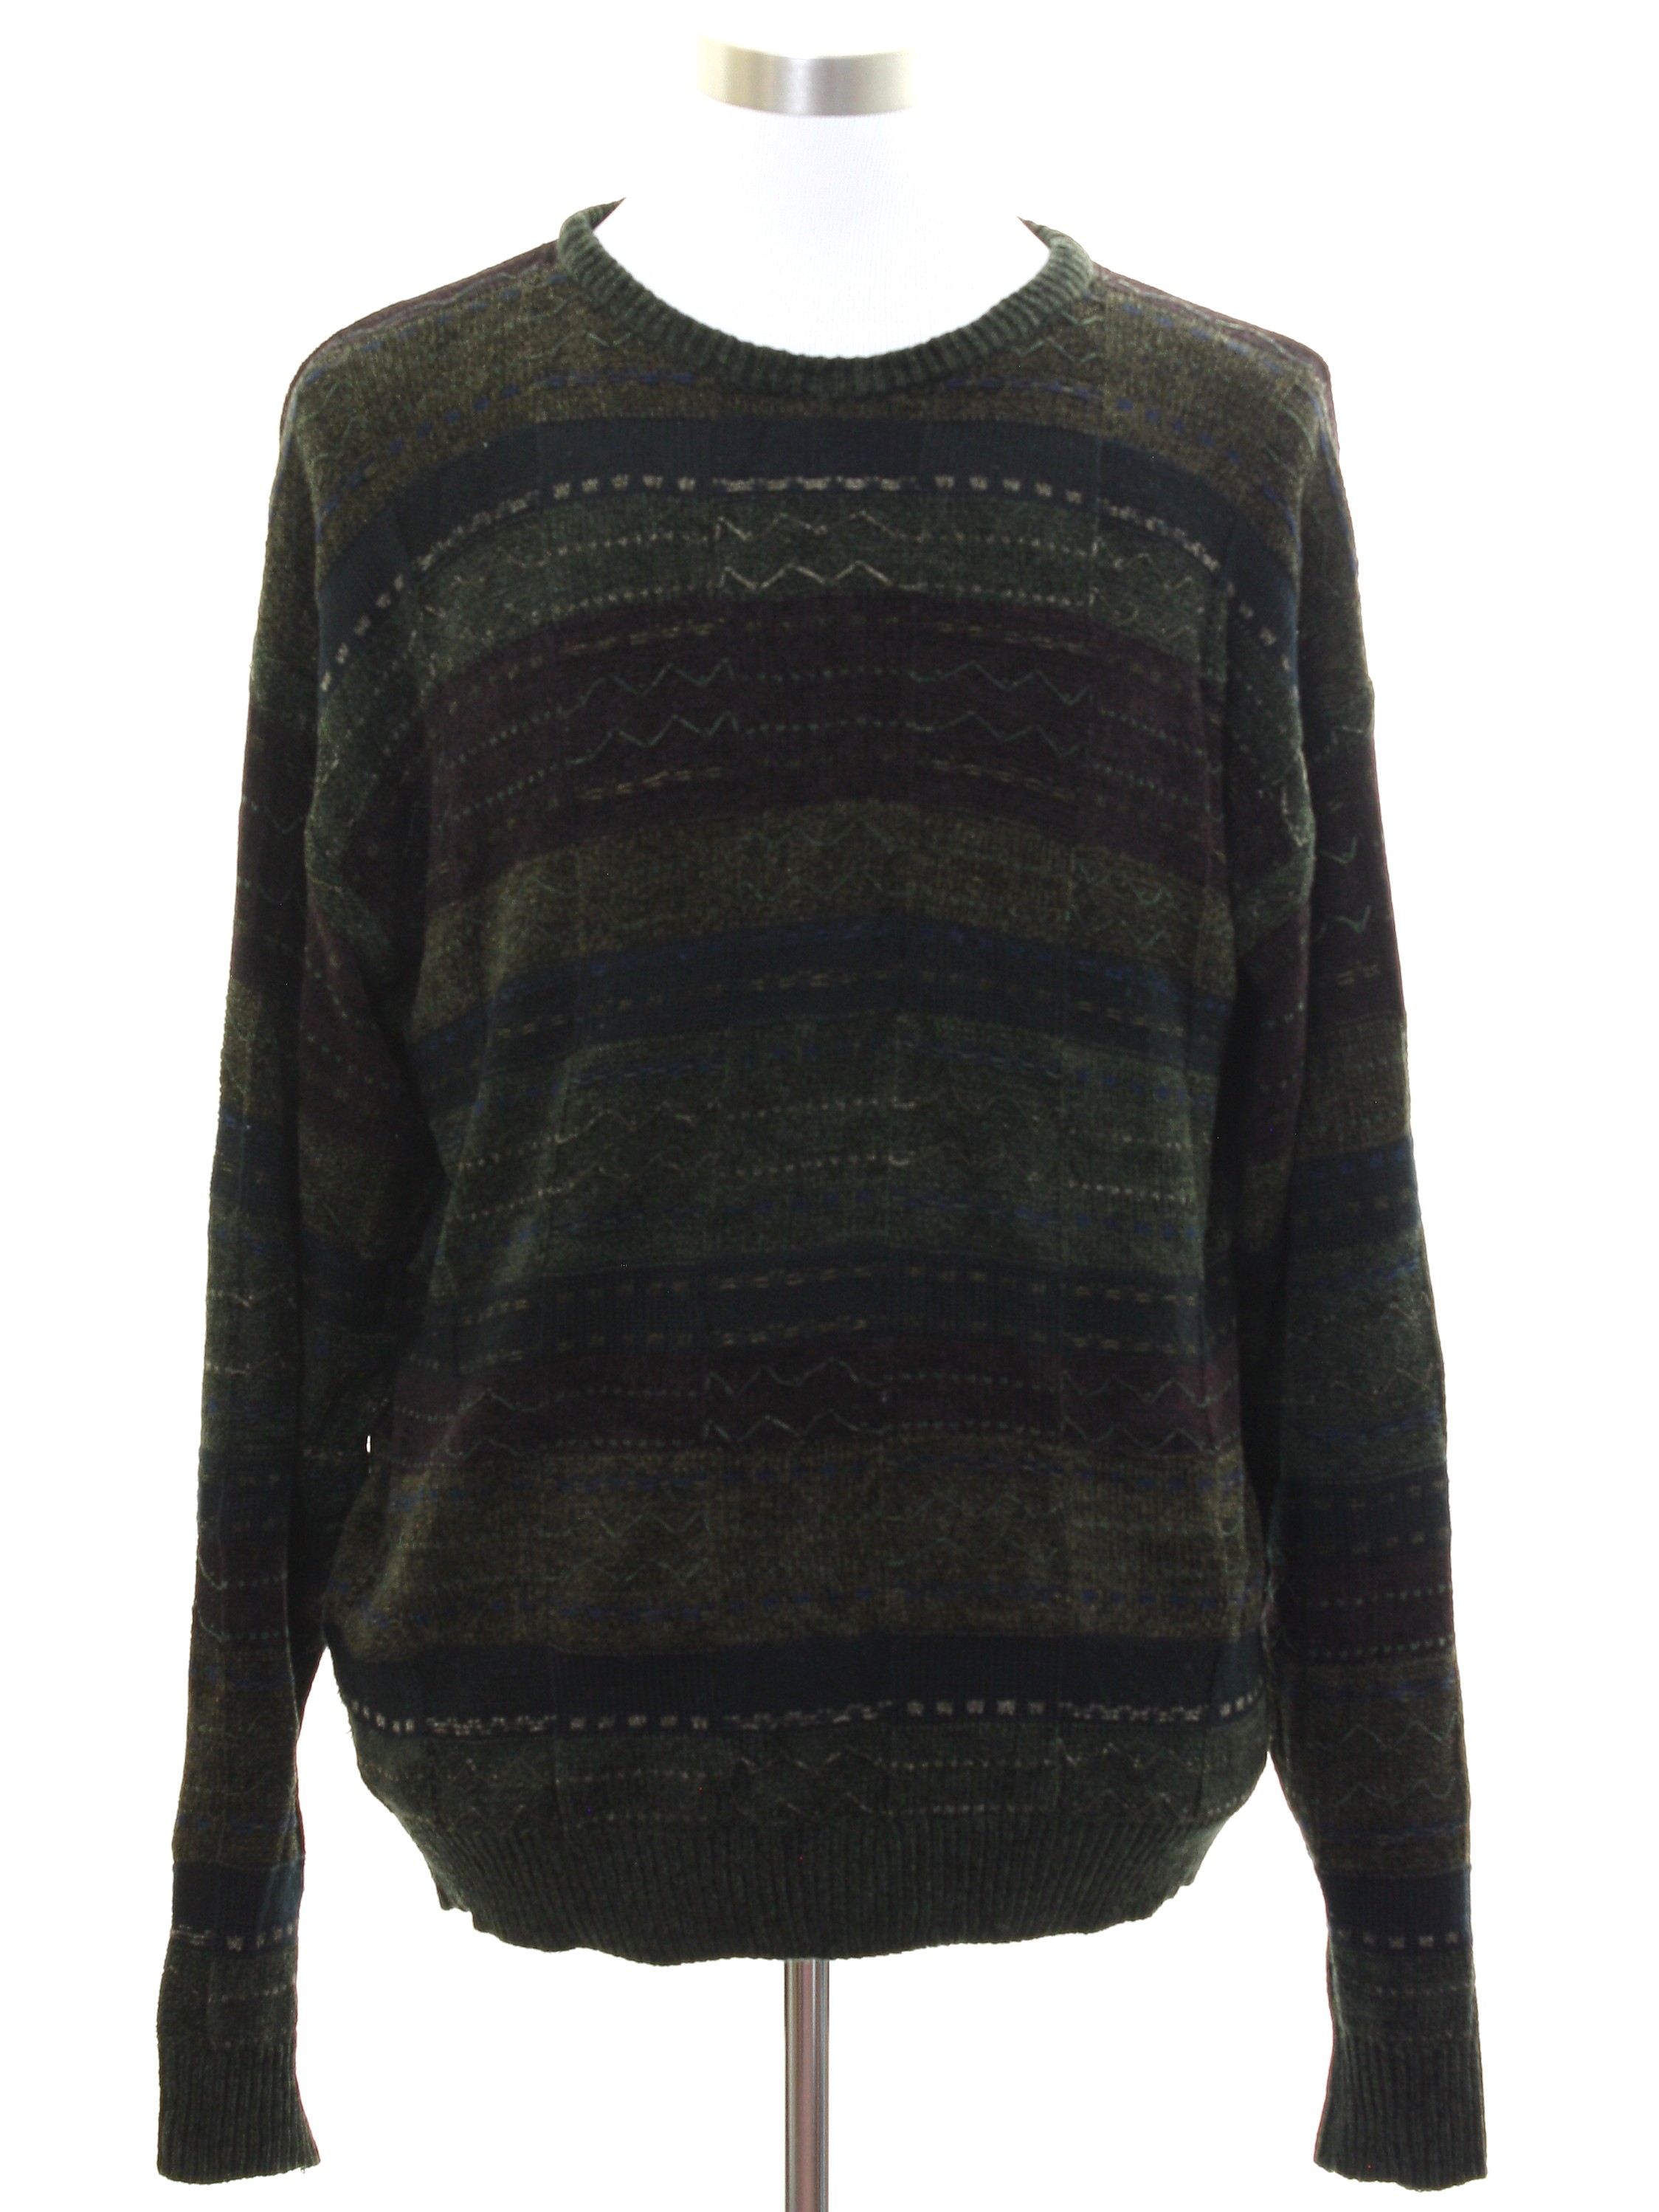 Retro Nineties Sweater: 90s -Consensus Sportswear- Mens olive green ...